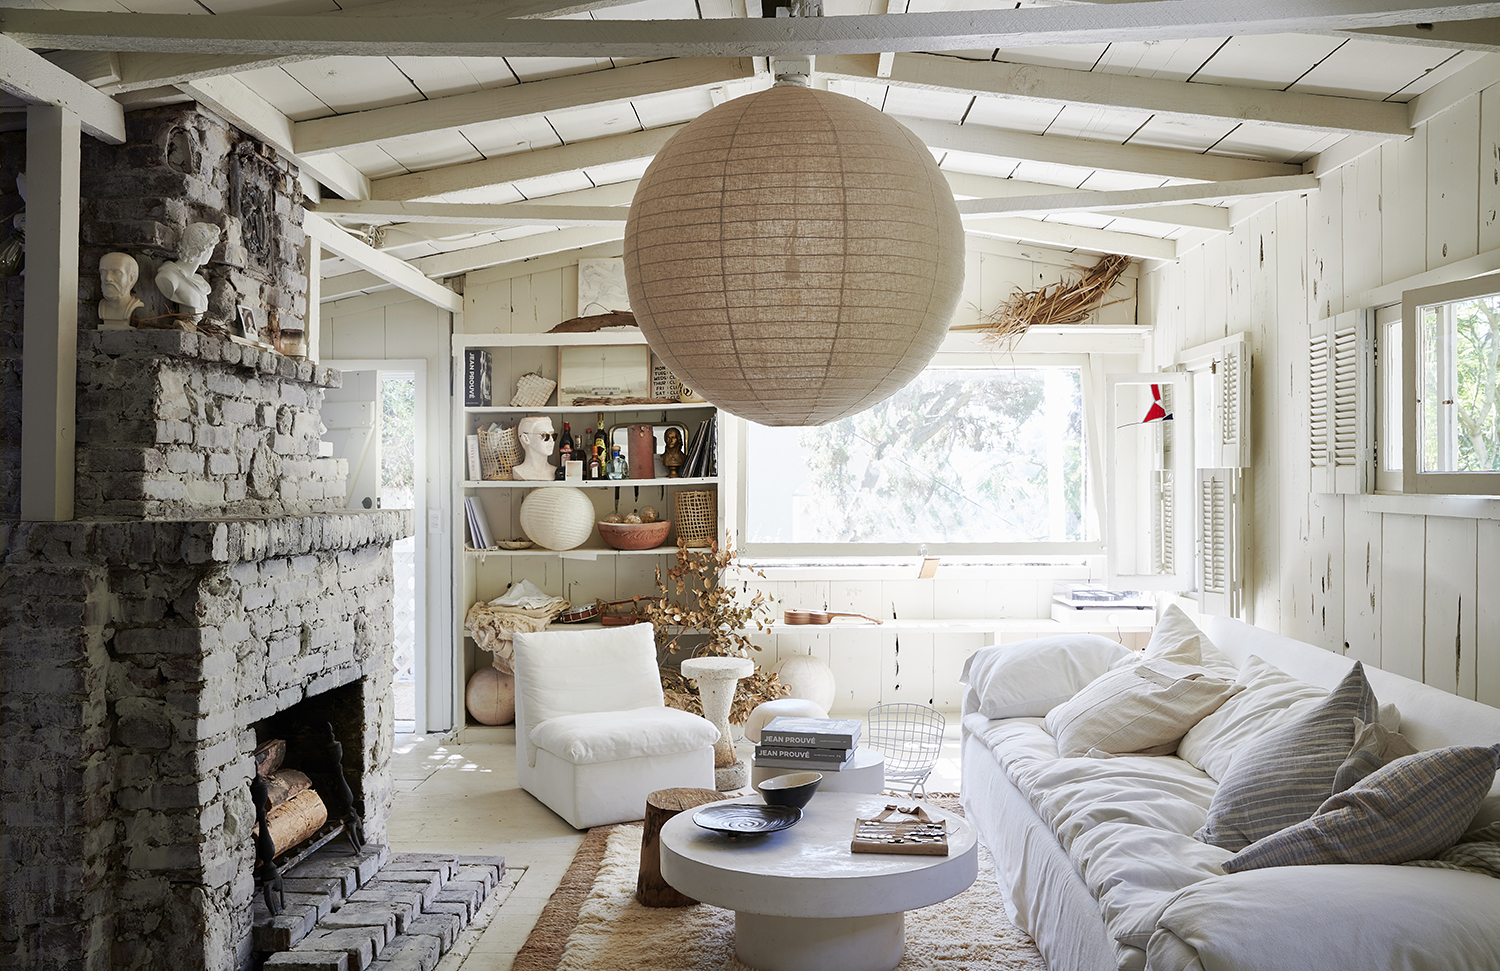 55 Awe-inspiring rustic living room design ideas